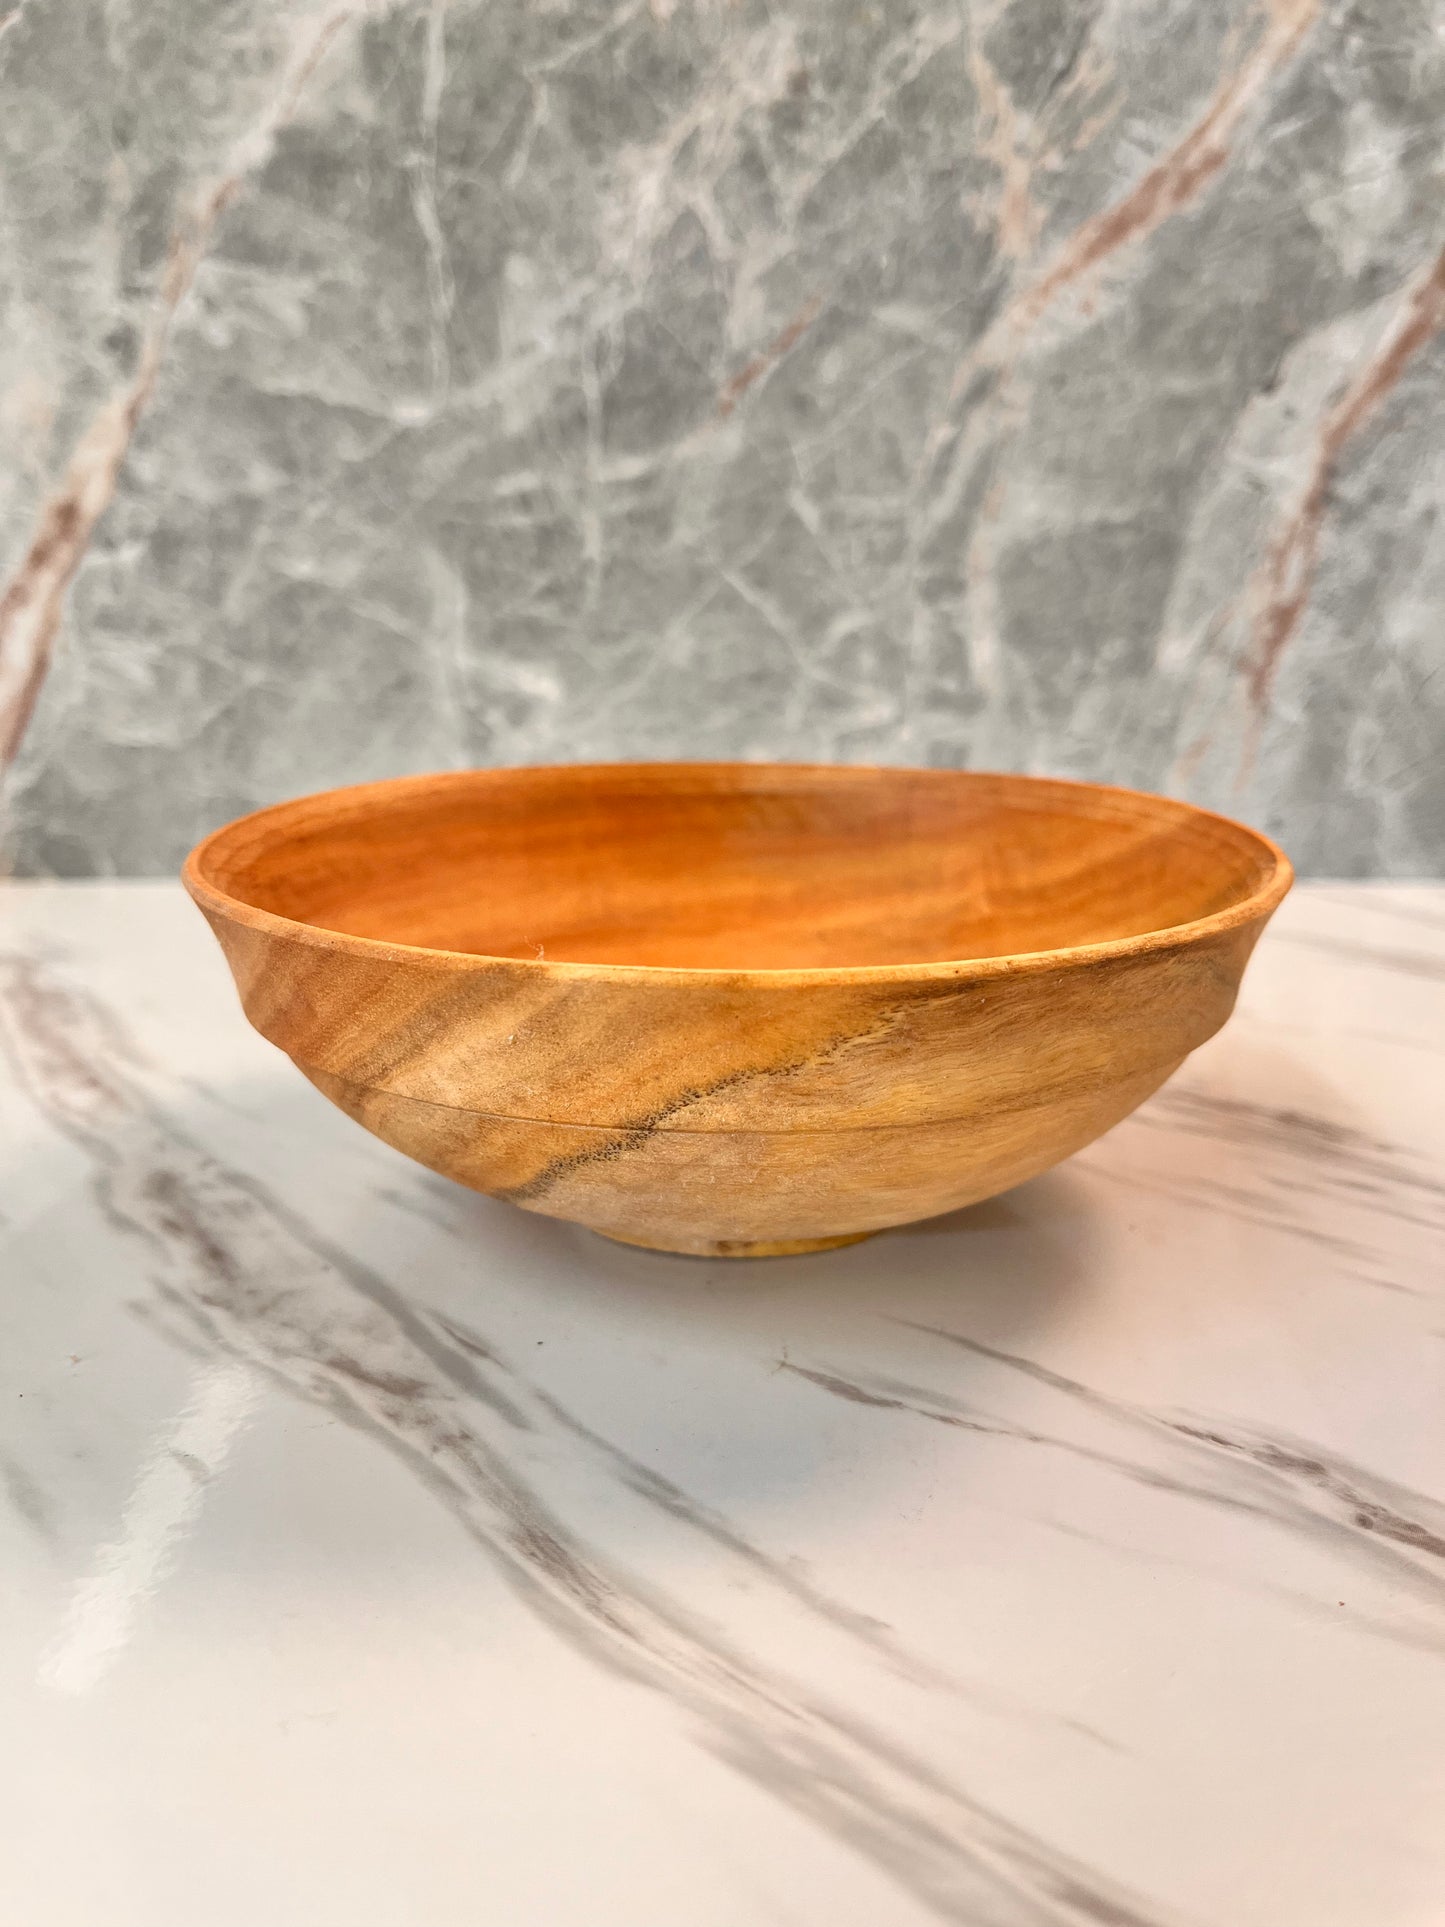 A 5-3/4" by 2" eucalyptus bowl